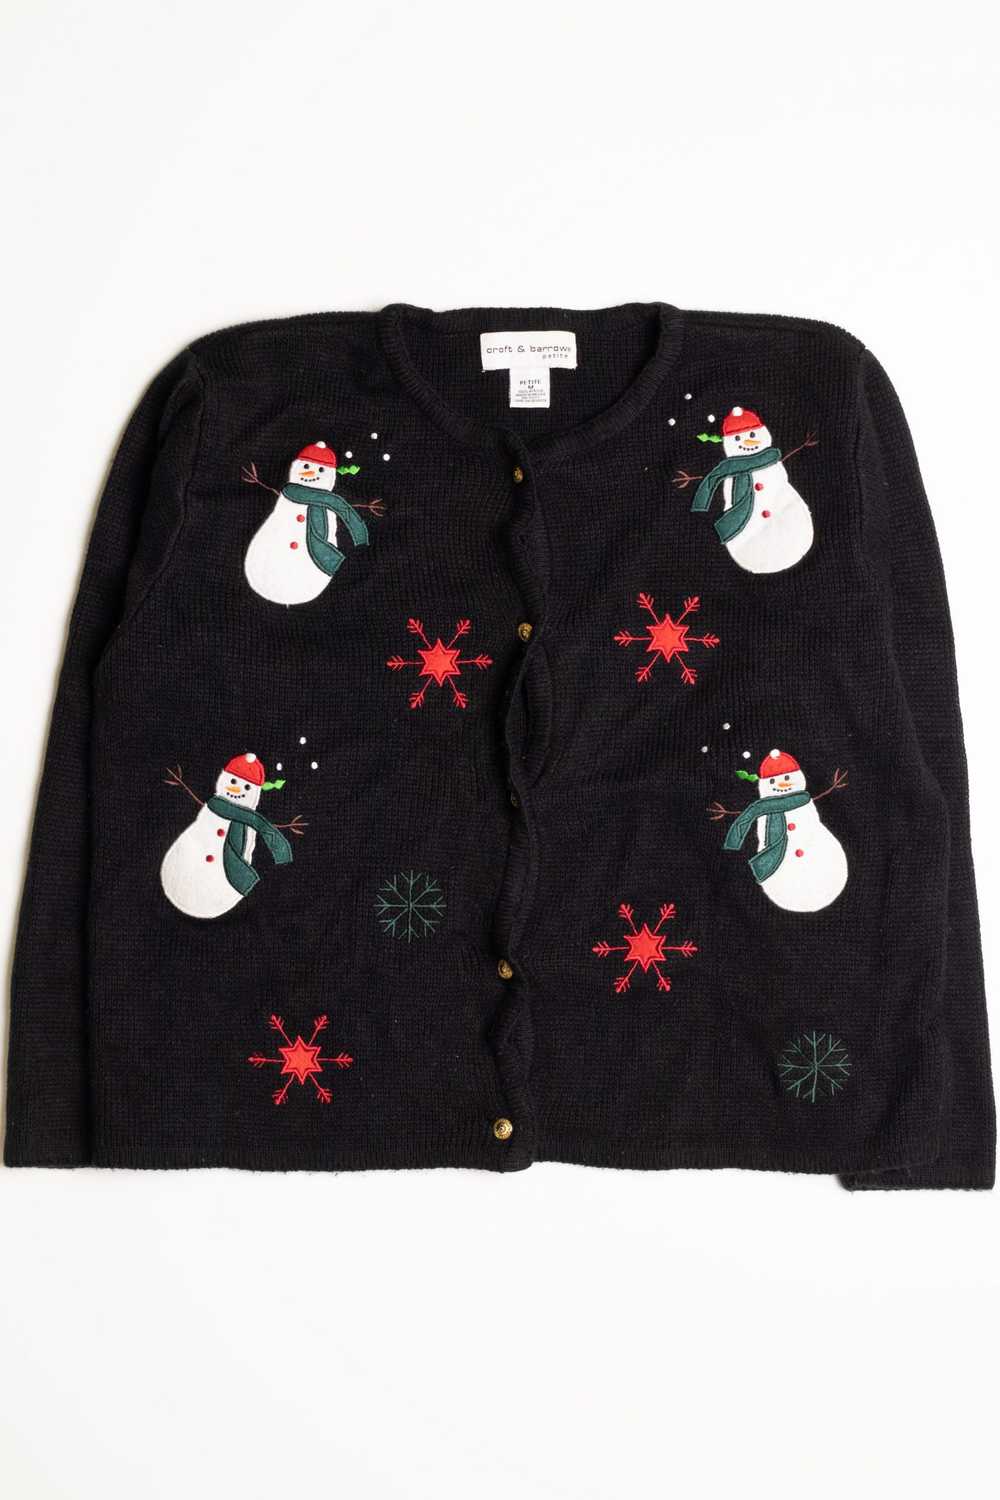 Black Ugly Christmas Sweater 56768 - image 3